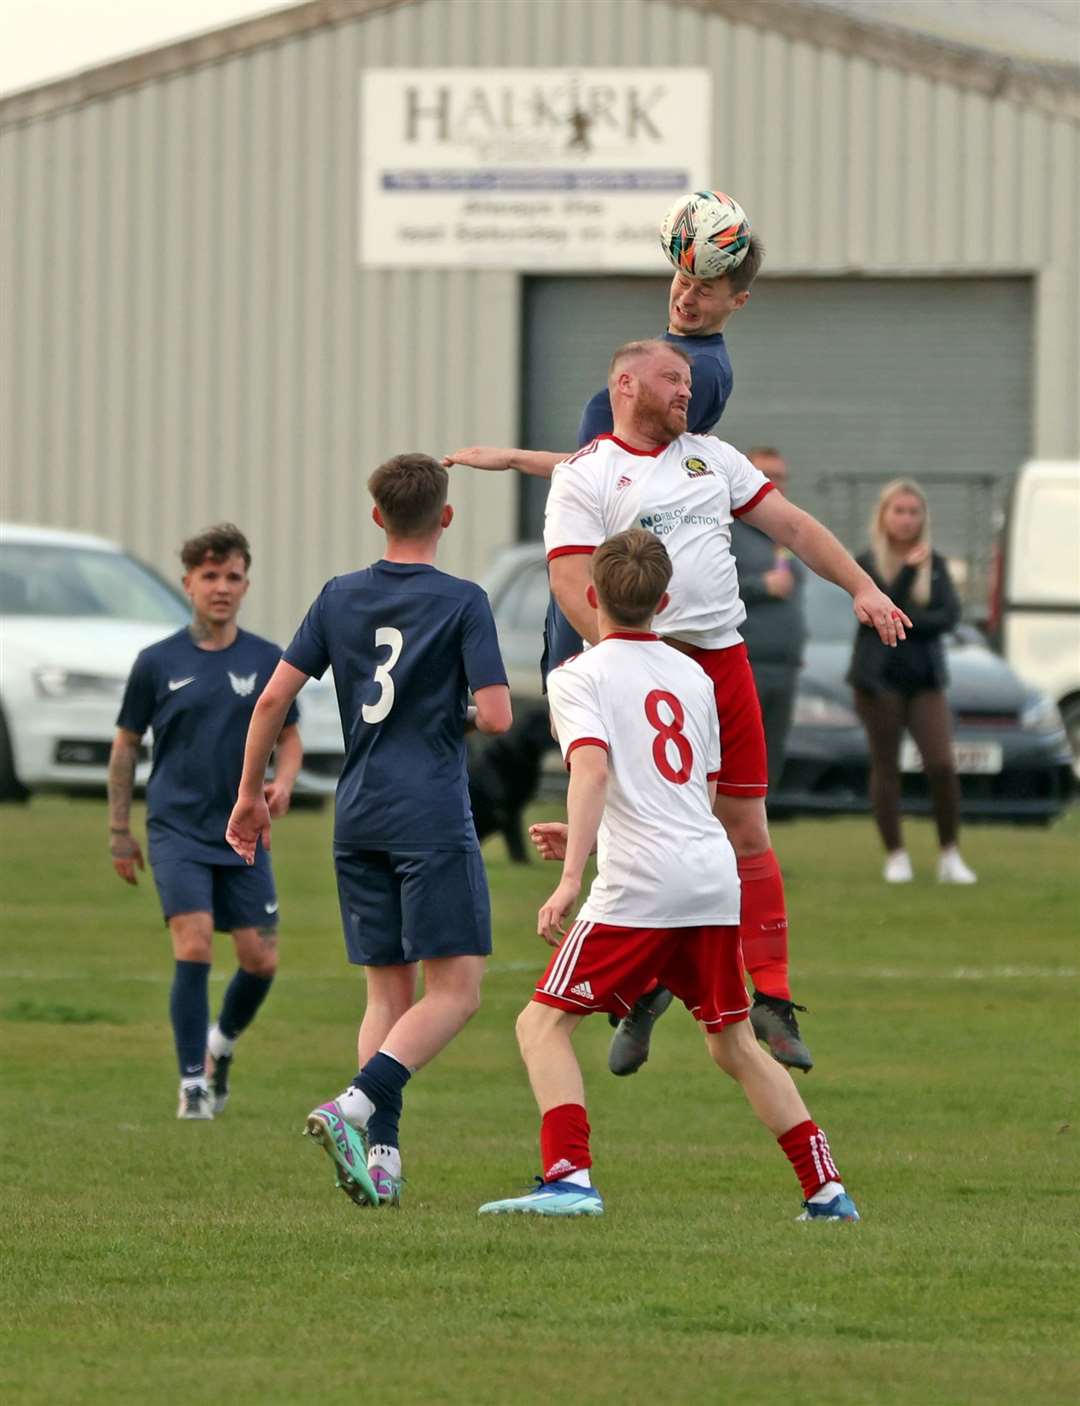 James Mackintosh of High Ormlie Hotspur beats Halkirk's Mark Mackay in the air. Picture: James Gunn